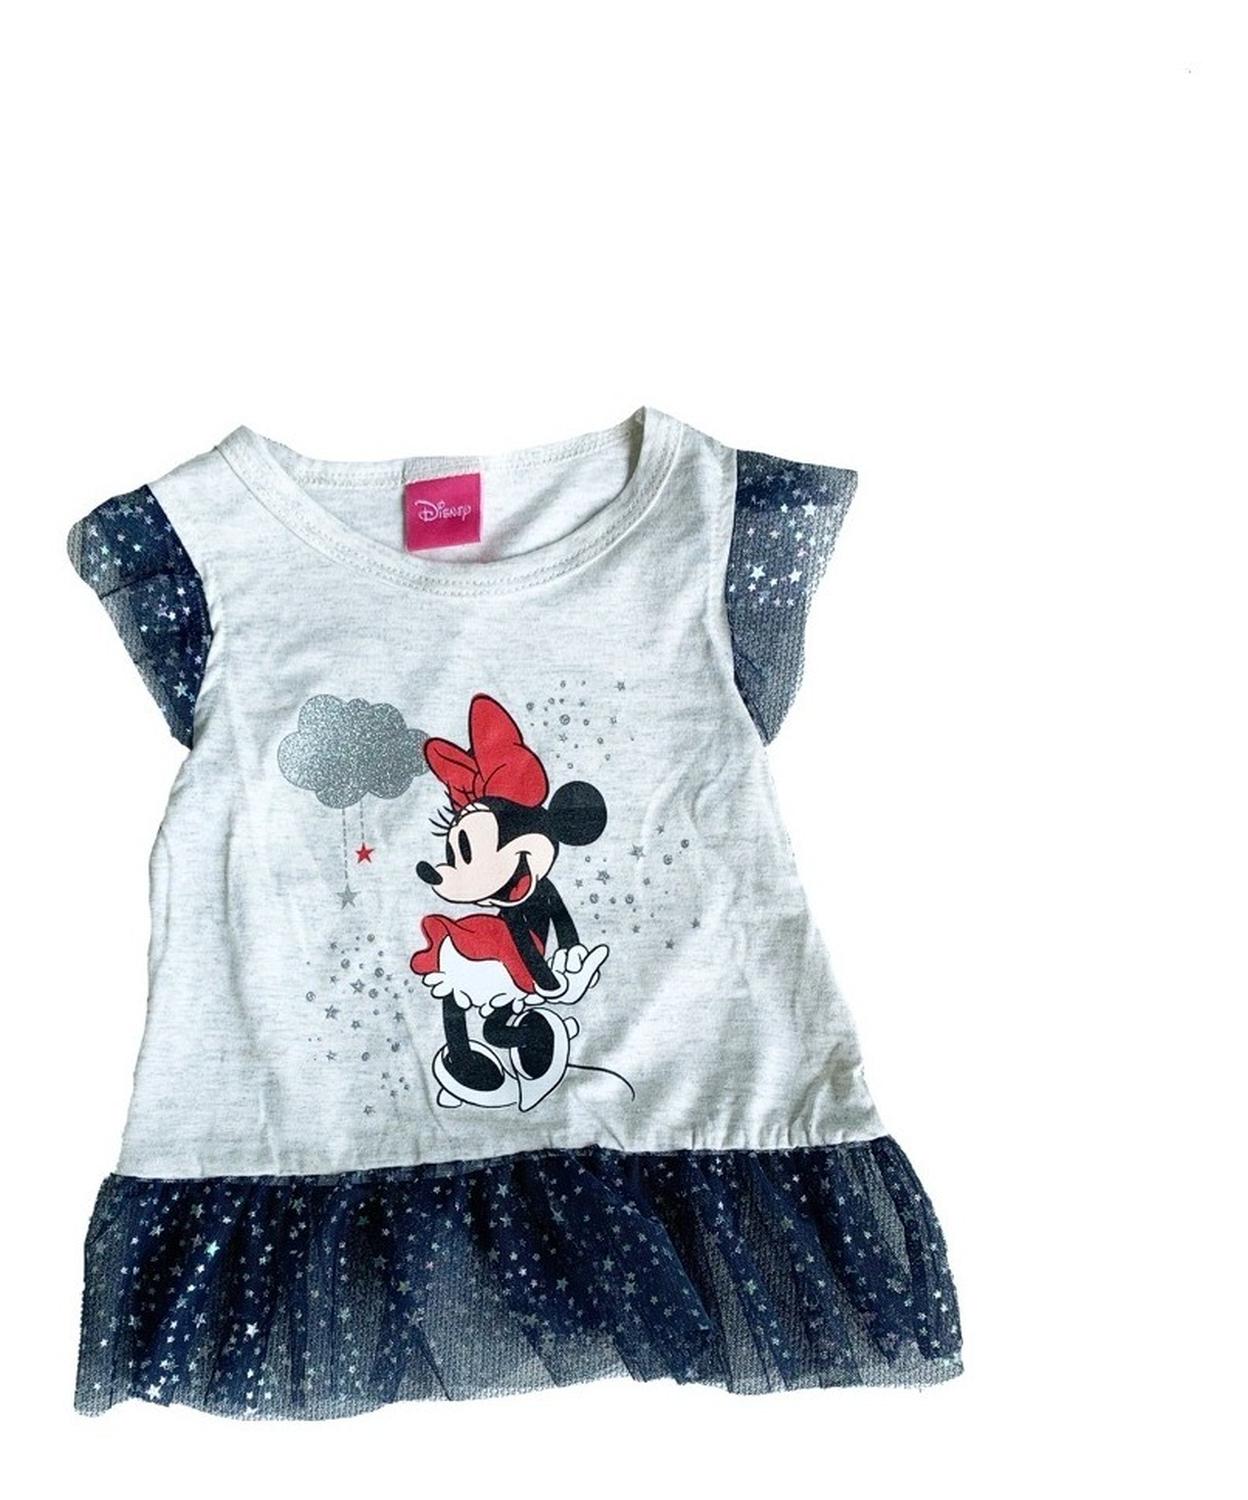 Conjunto Algodon Malla Con Blusa Estampada Disney Minnie